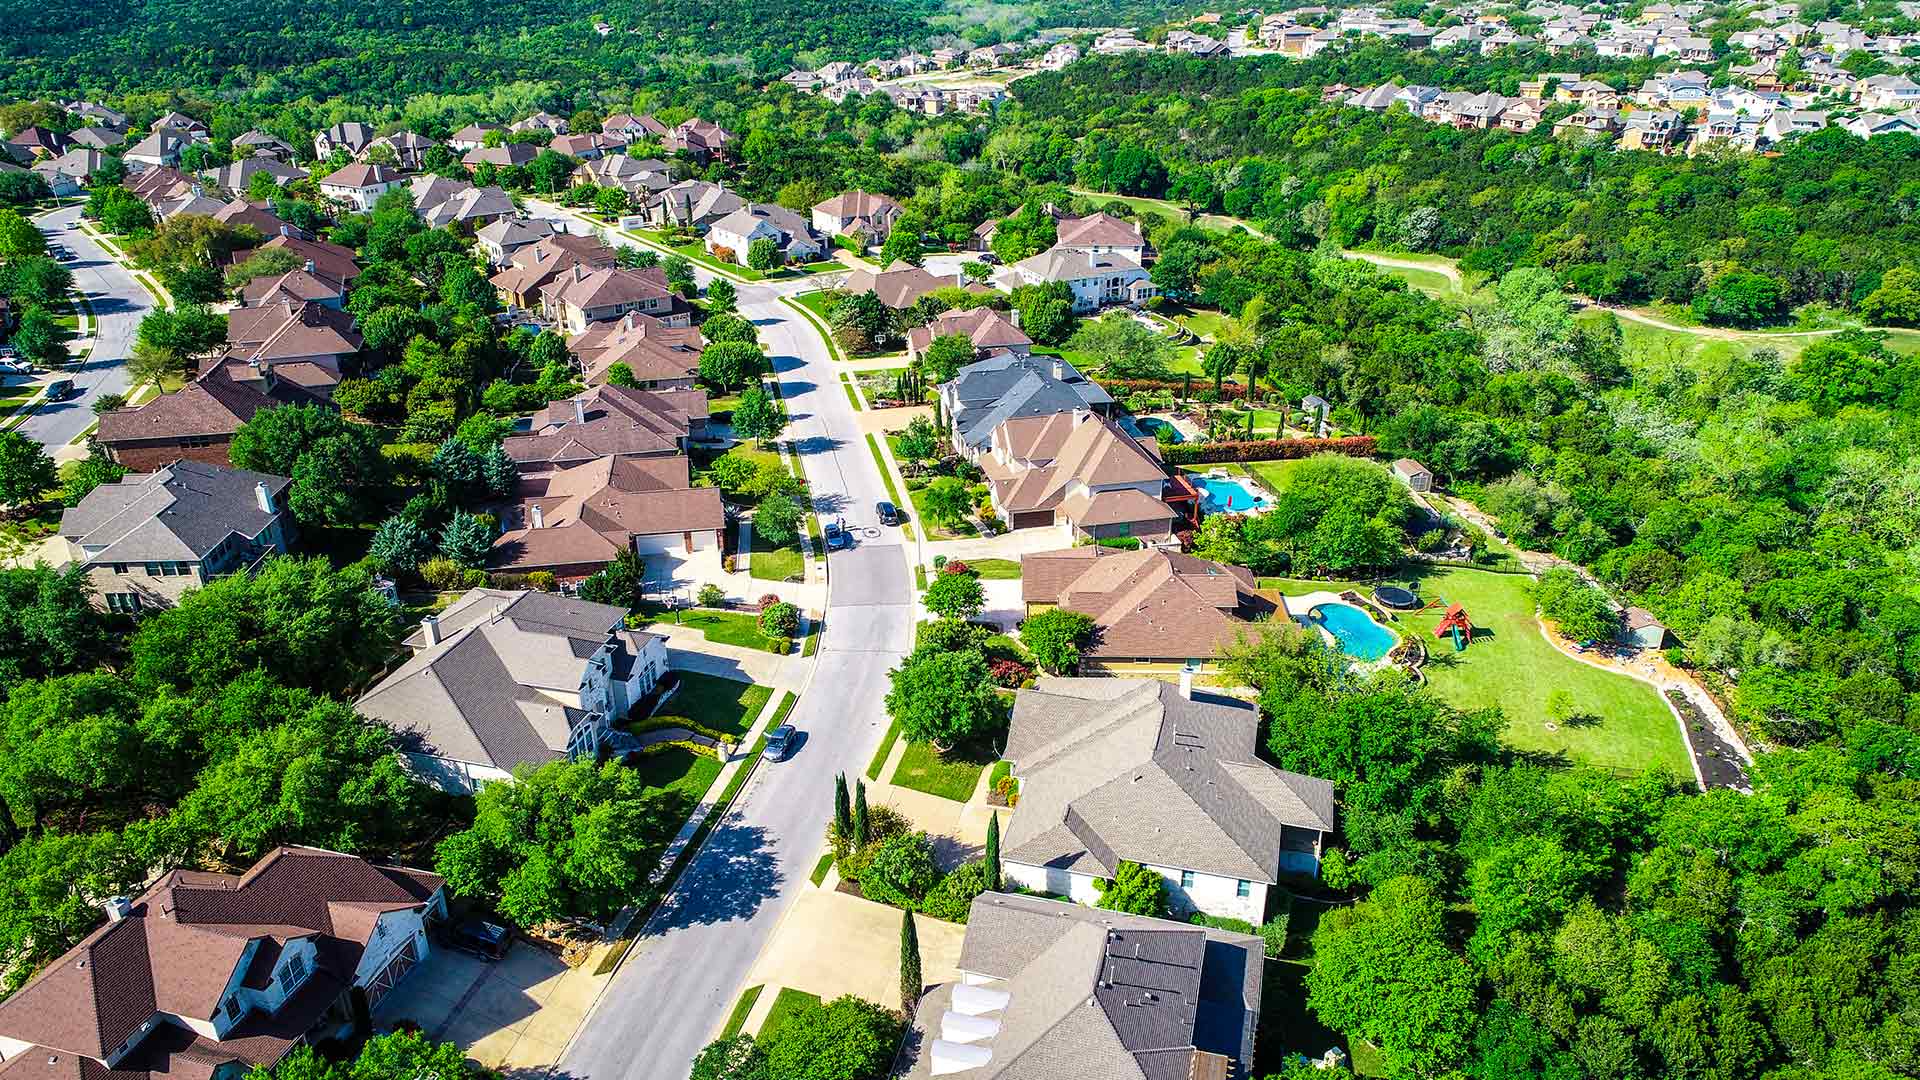 Aerial photo of Cedar Park, TX suburbs amongst hills and green trees.